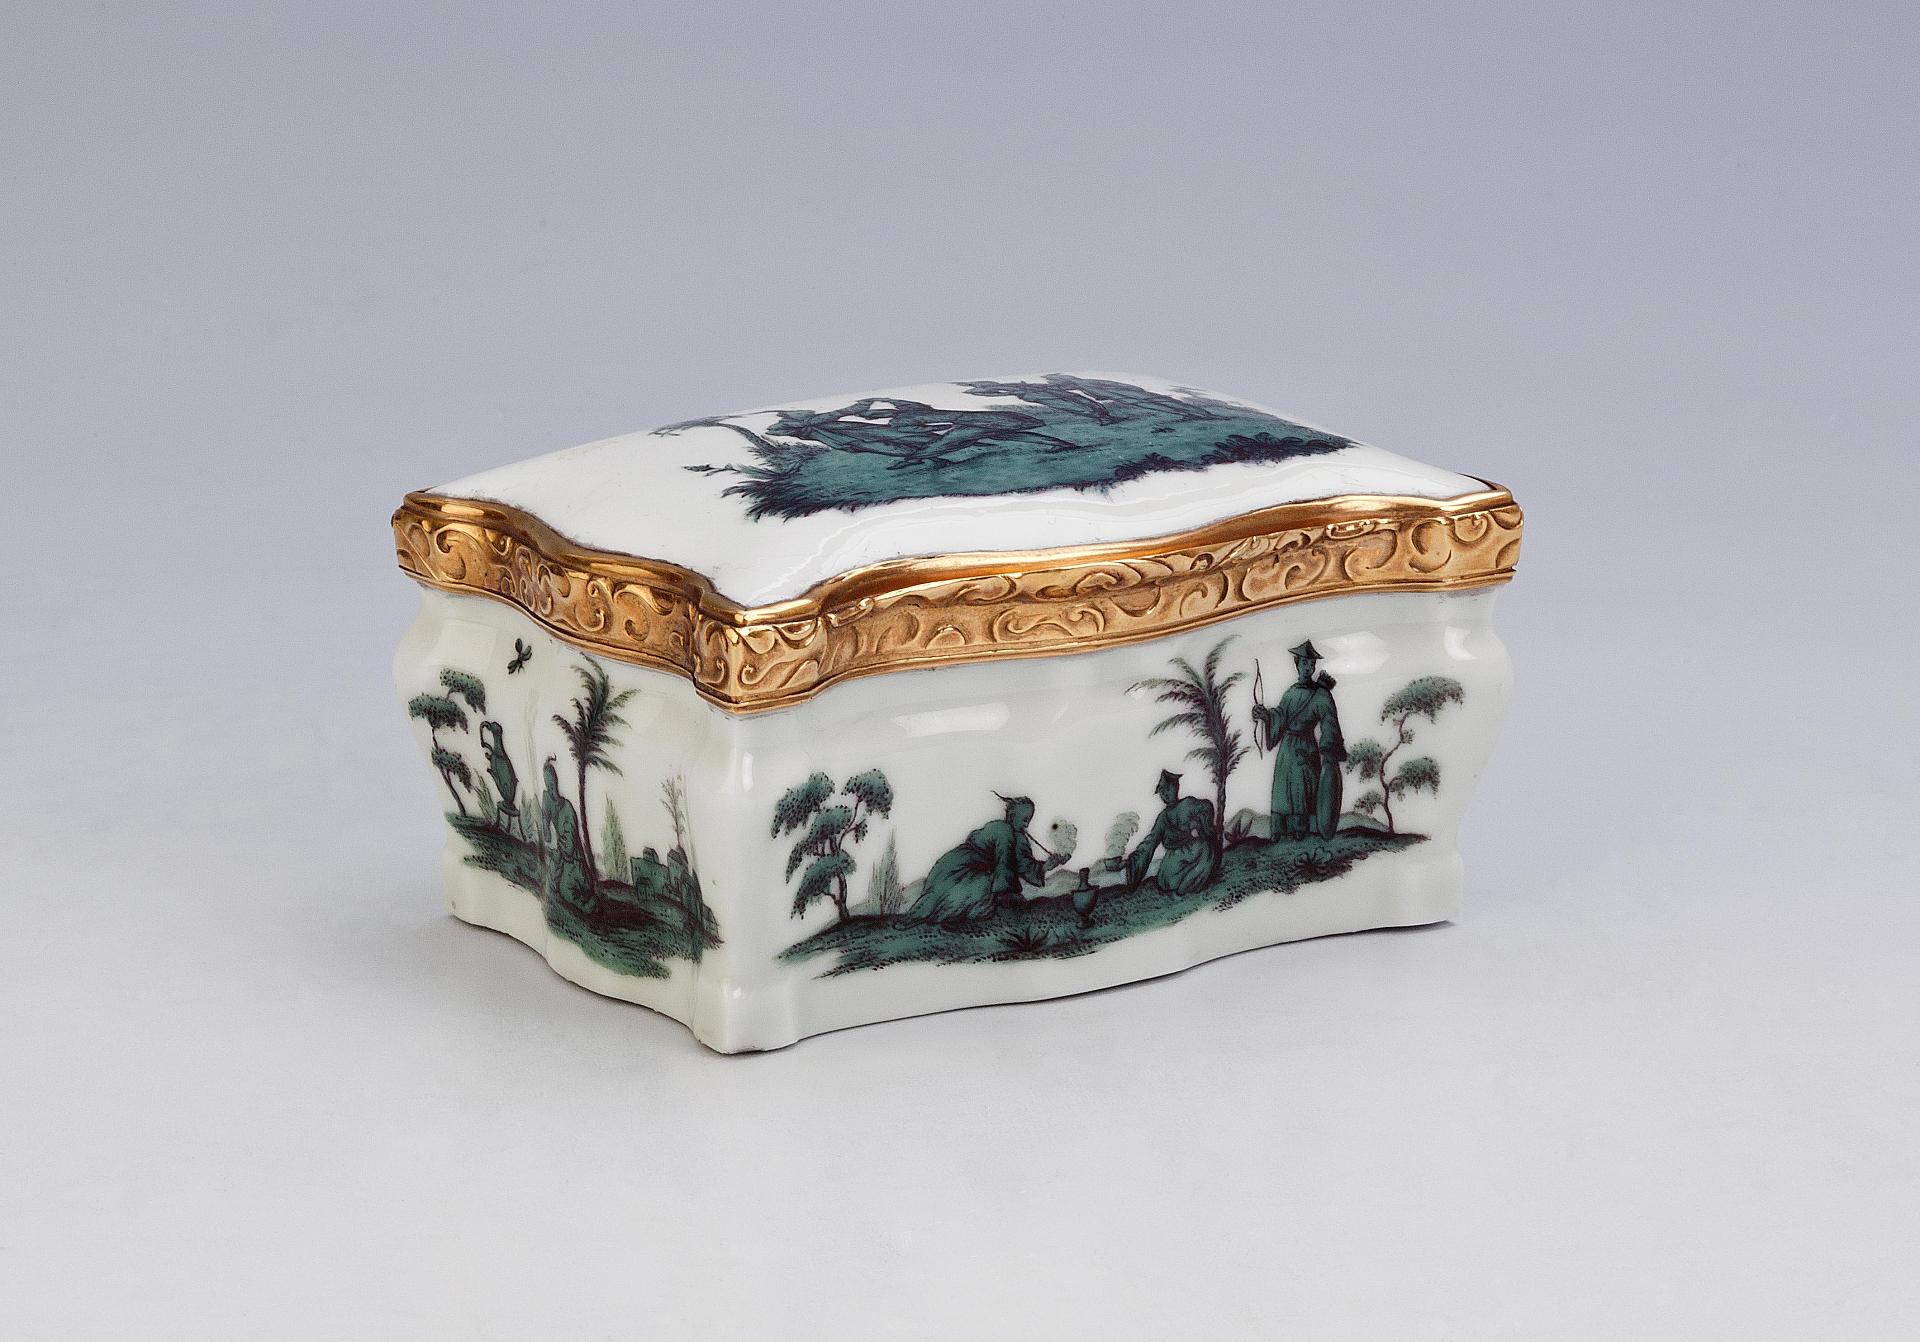 Snuffbox Elizabeth period, porcelain, underglaze painting, gilding